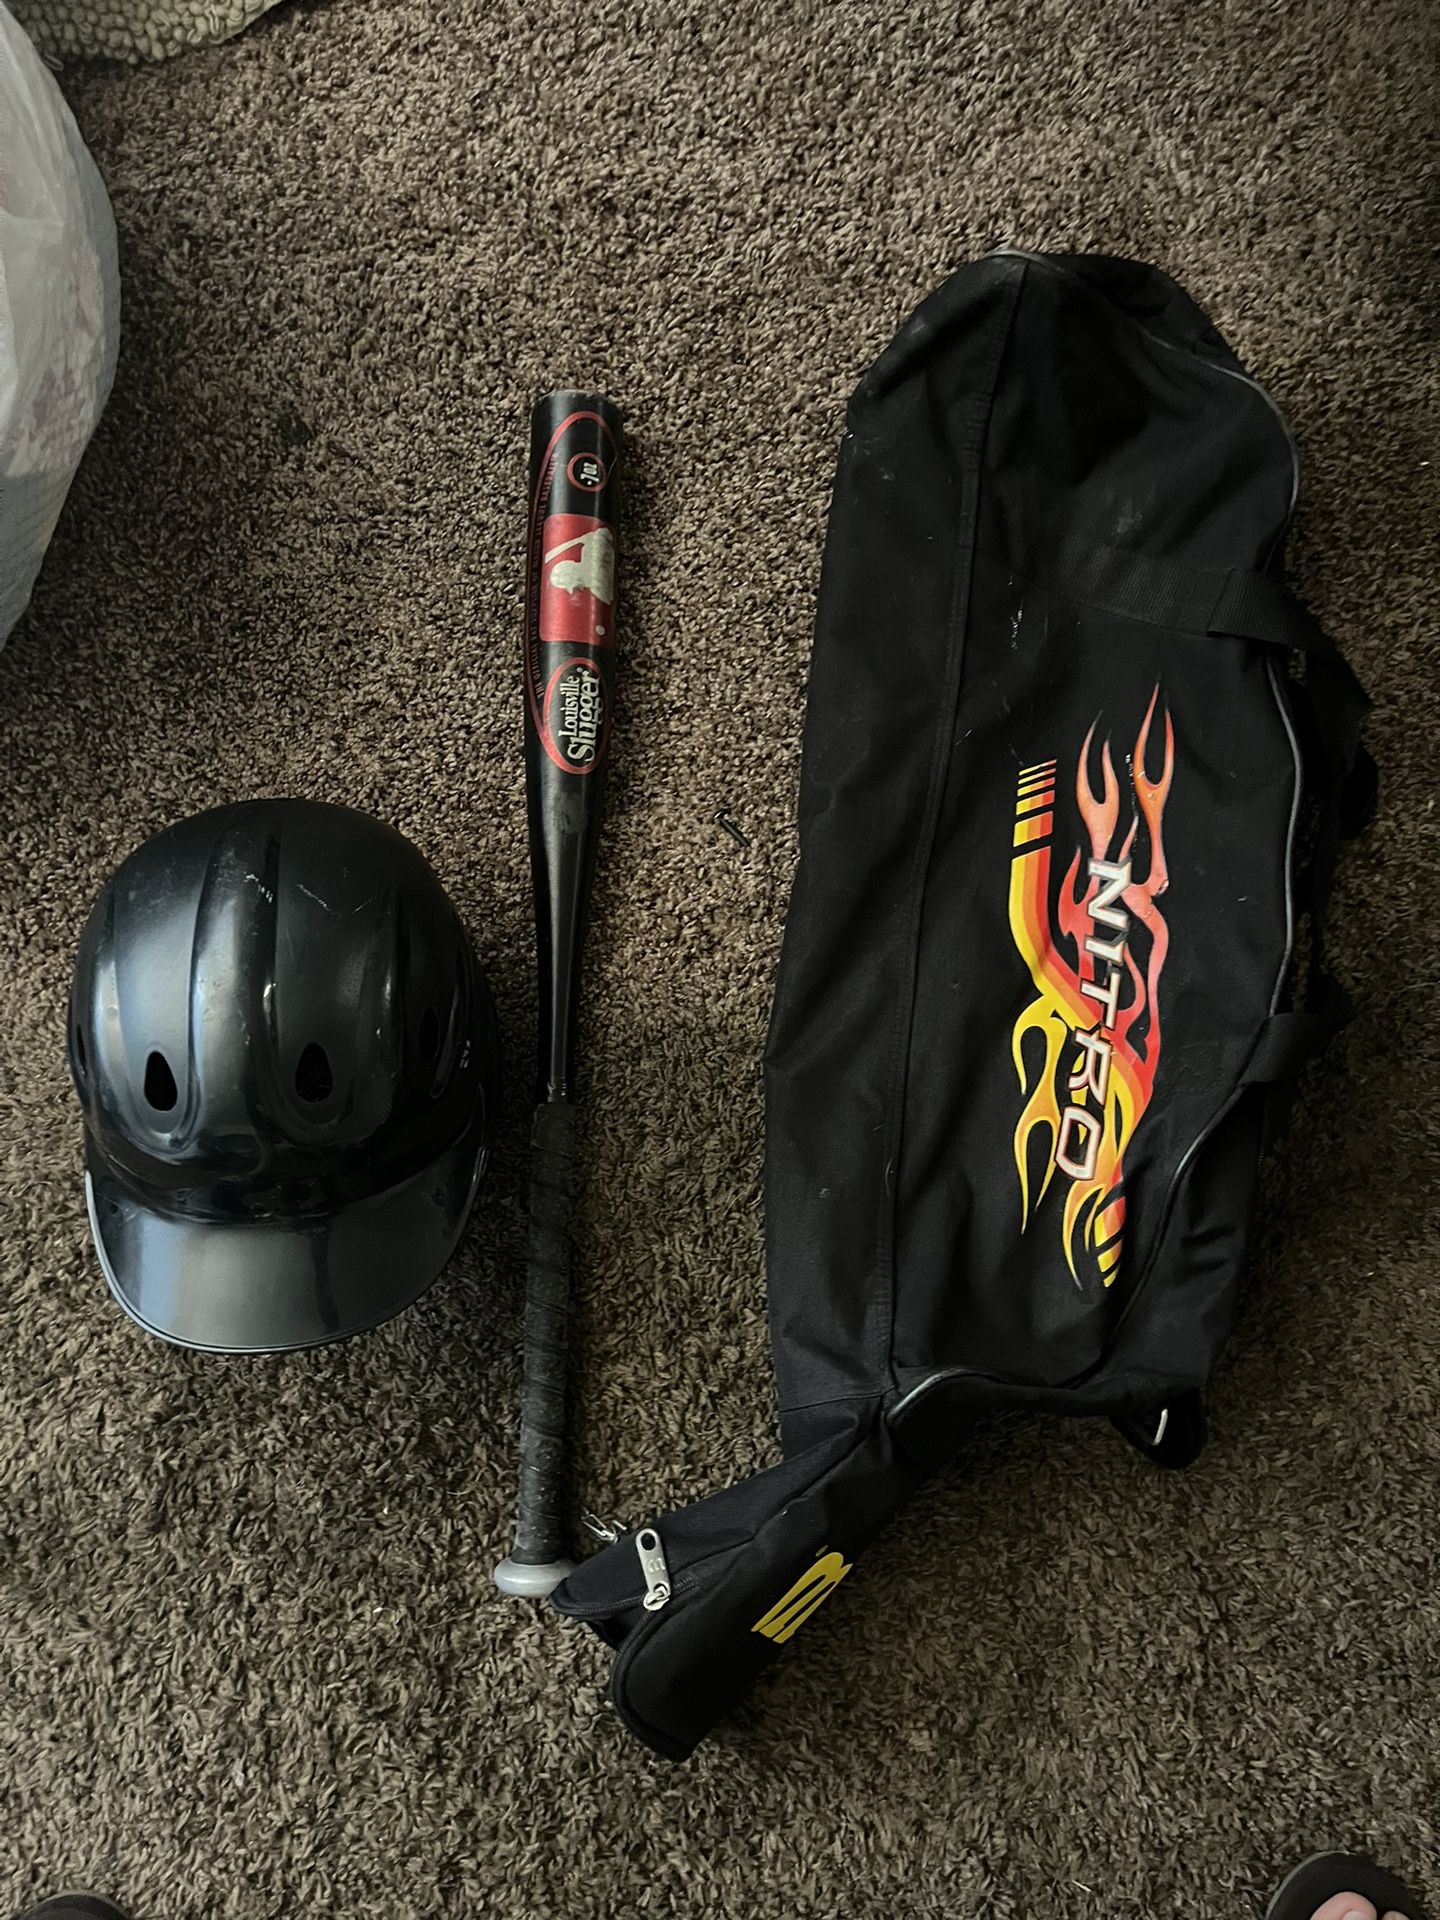 Baseball Bag With Helmet And Bat